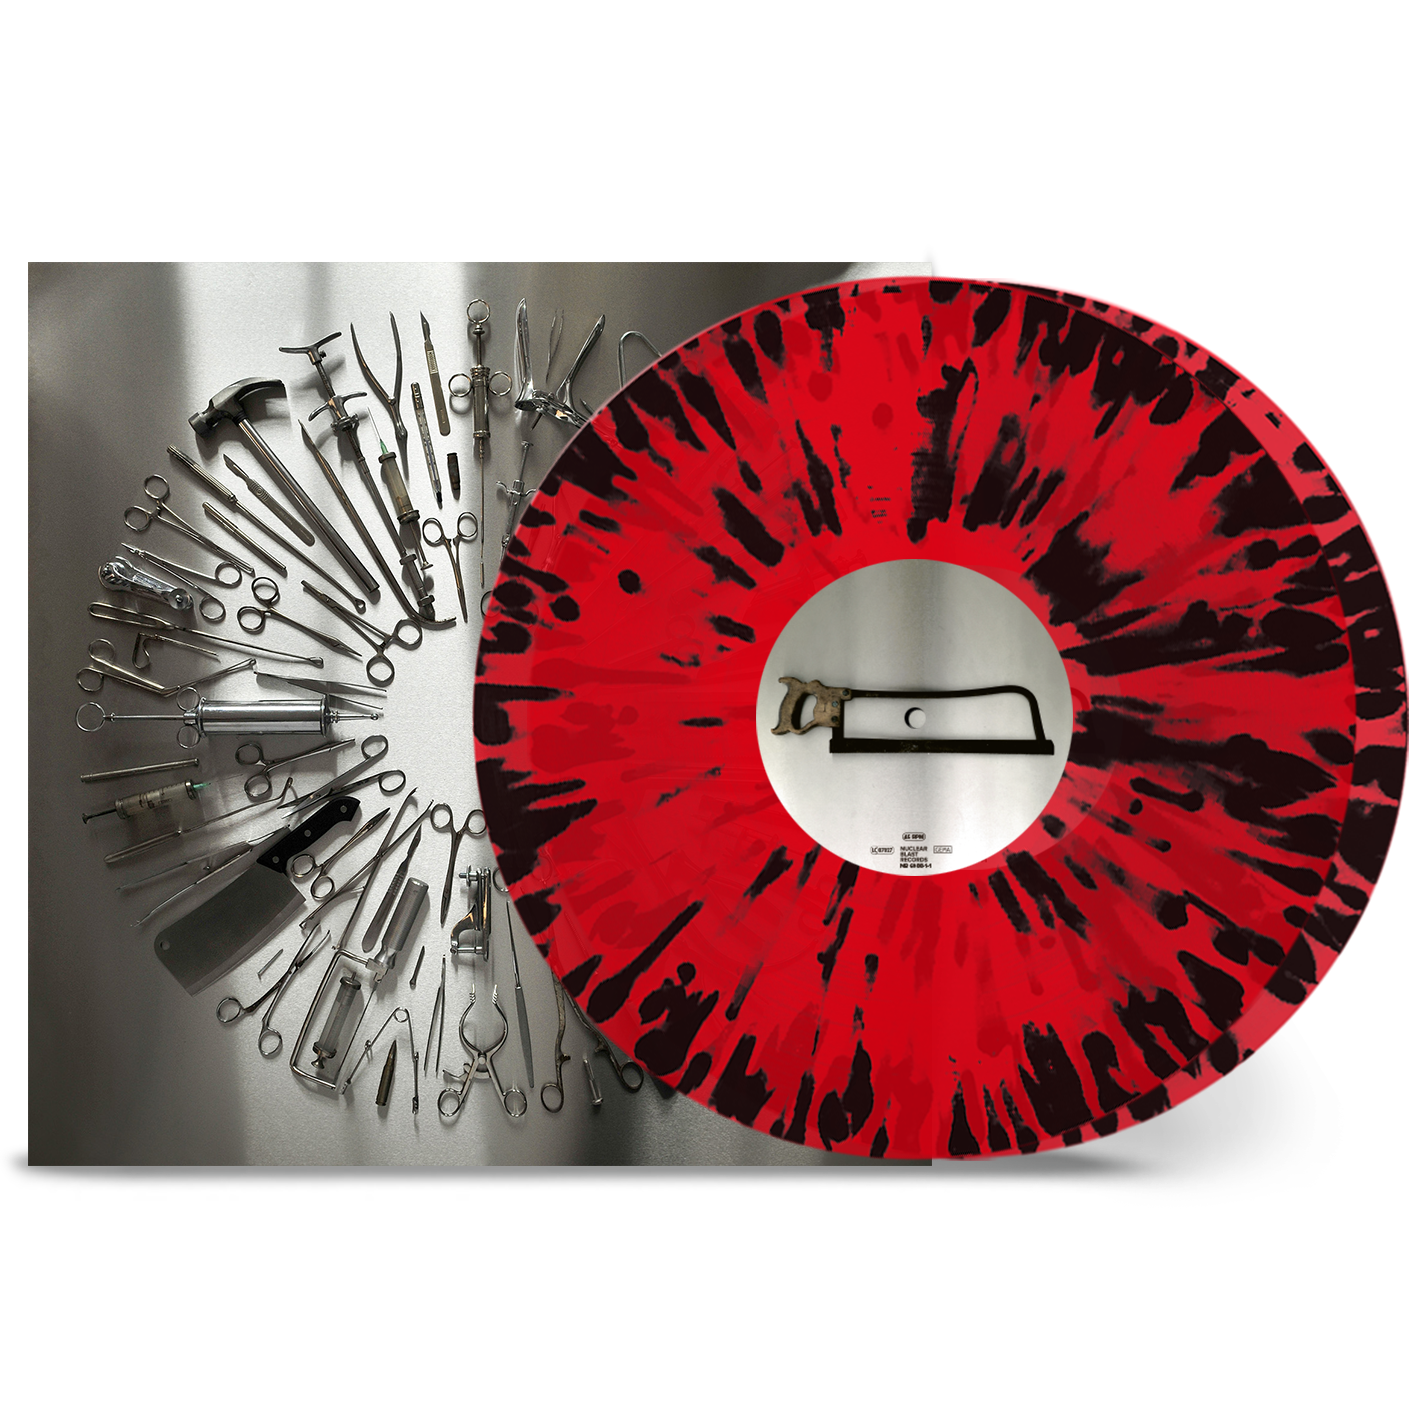 Carcass - Surgical Steel (10 Year Anniversary): Limited 45 RPM Red + Black Splatter Vinyl 2LP